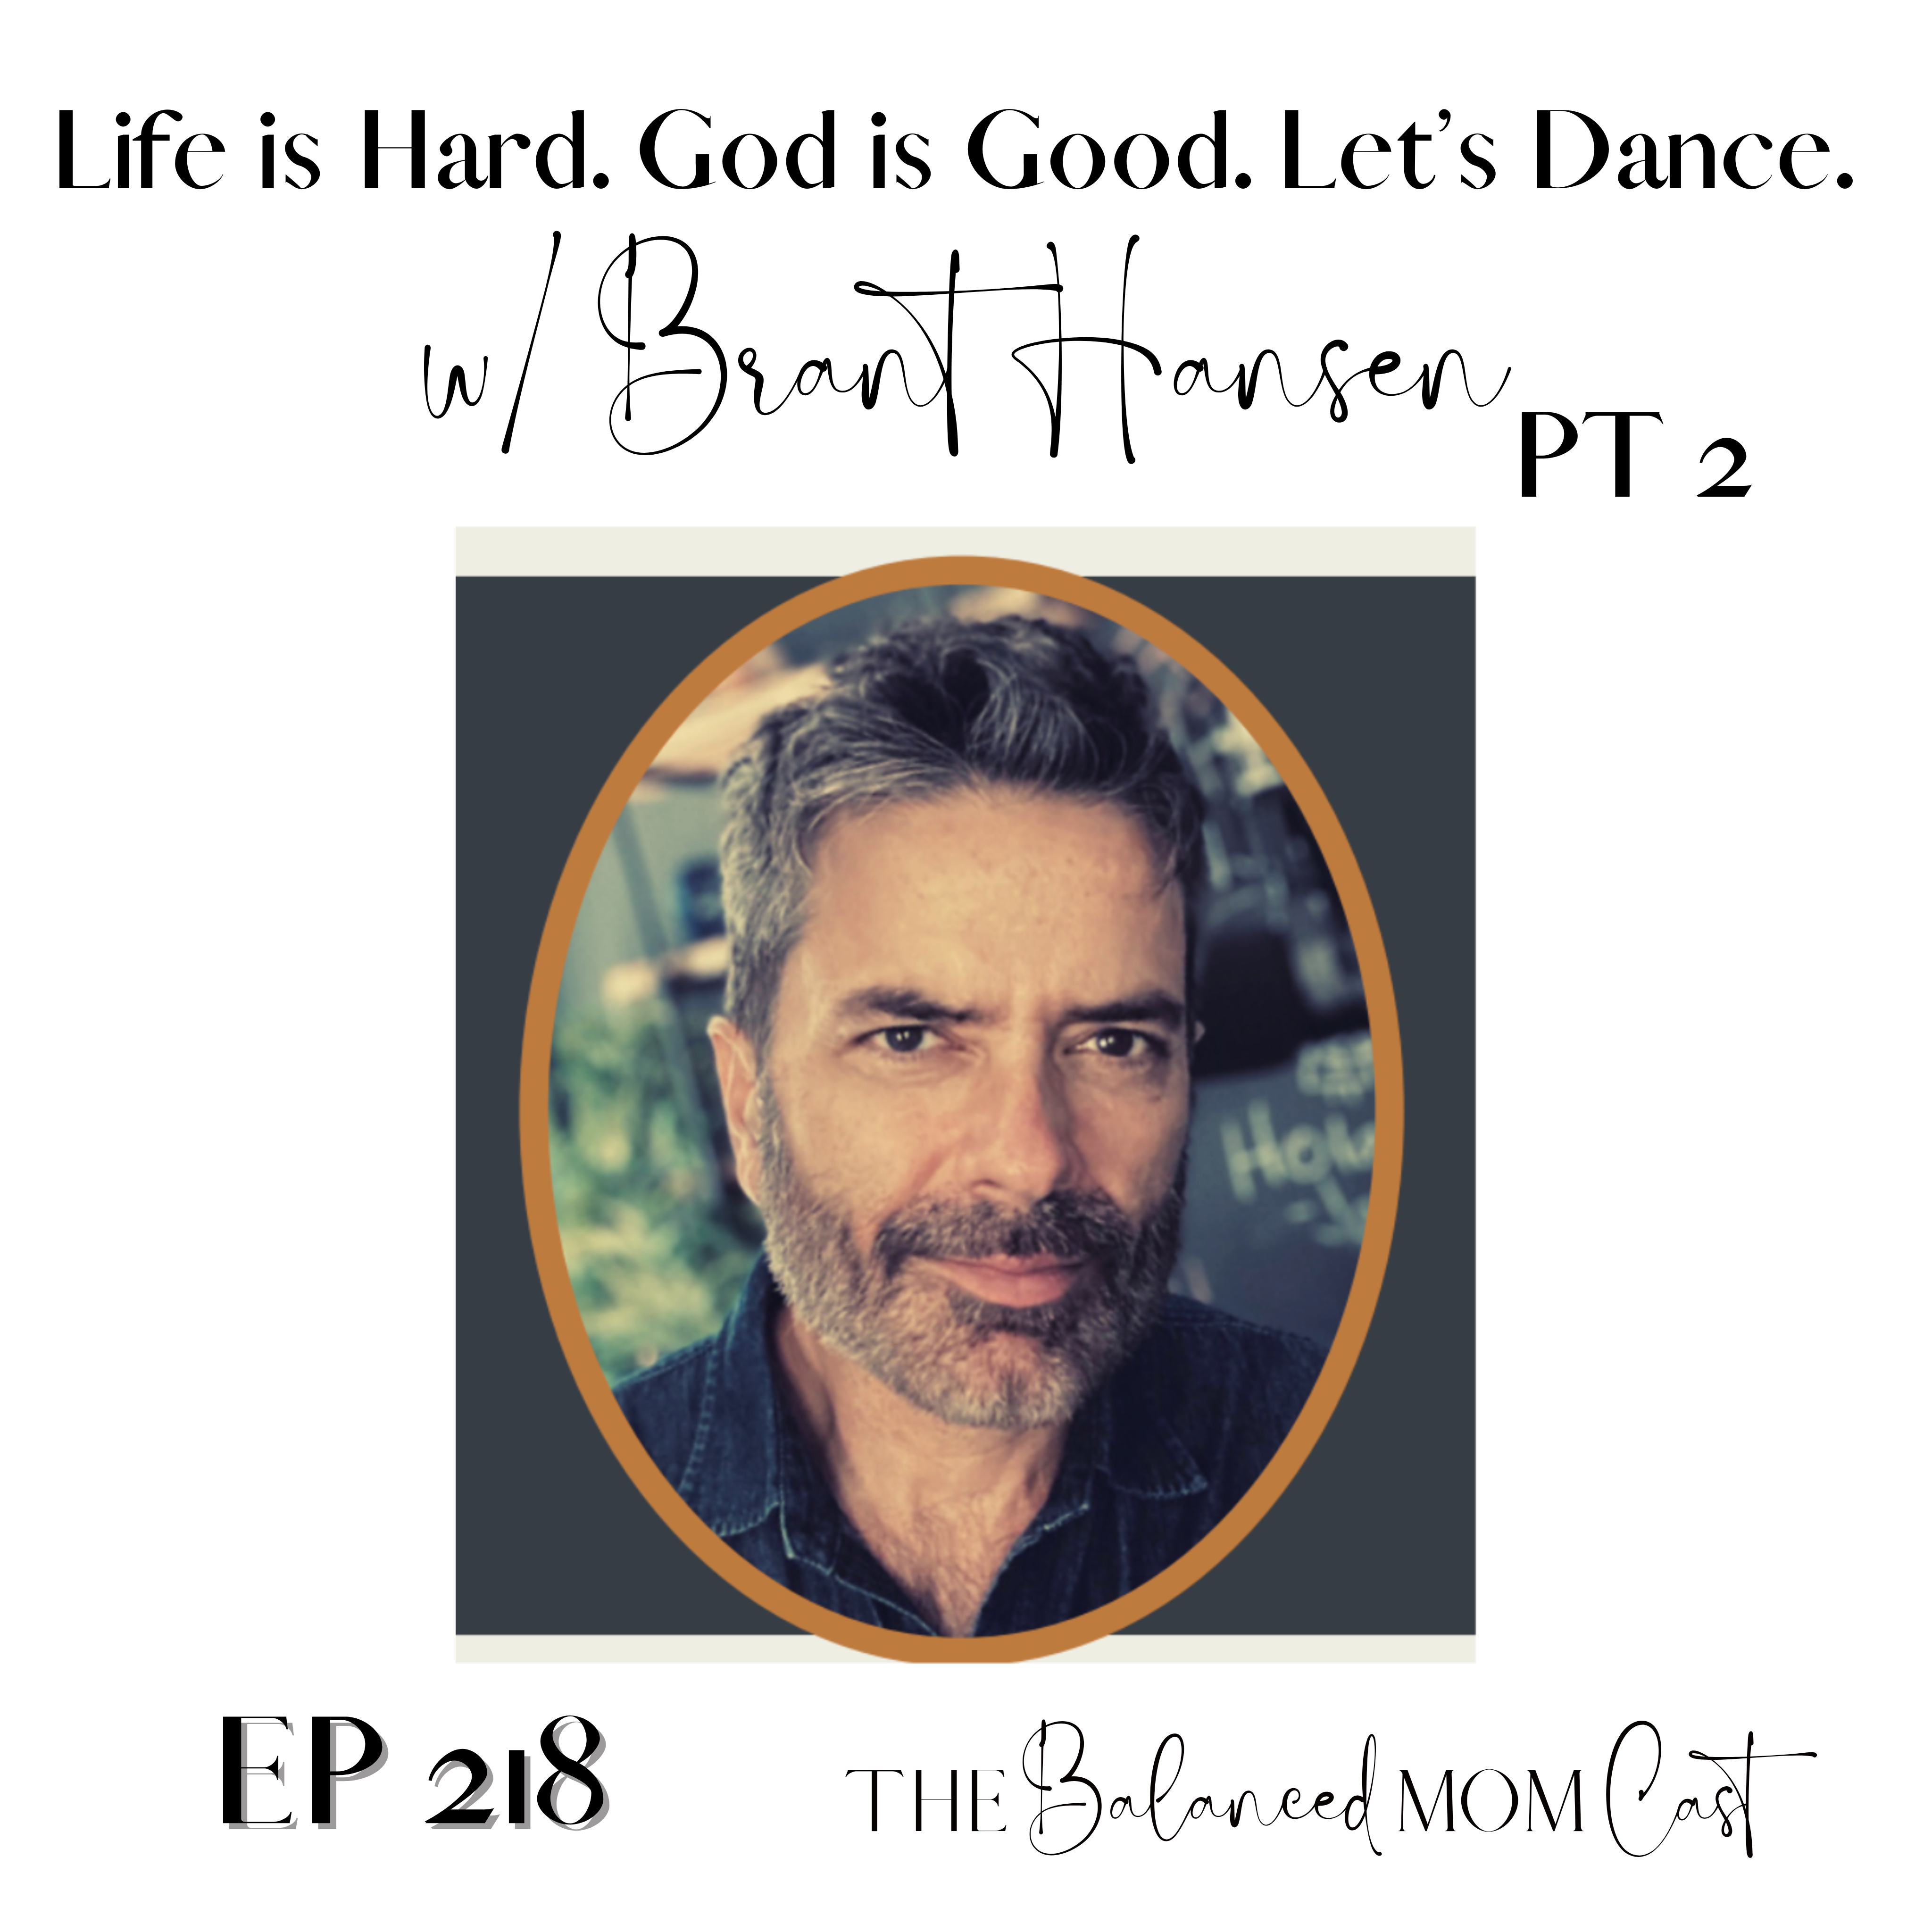 Ep 218: Life is Hard. God is Good. Let’s Dance. w/Brant Hansen, Part 2